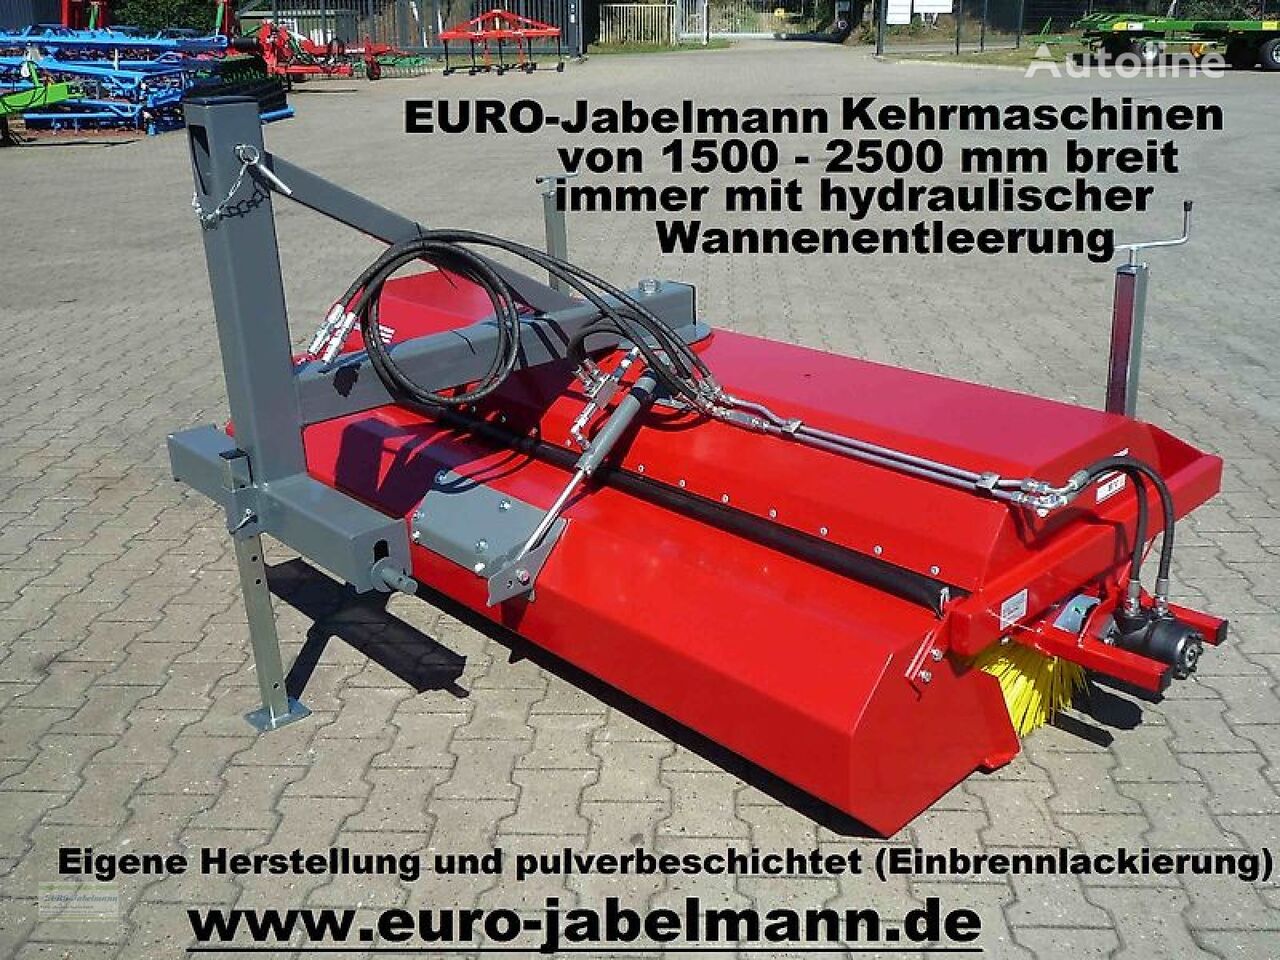 ny Euro-Jabelmann Kehrmaschinen, NEU, Breiten 1500 - 2500 mm, eigene Herstellung, sopmaskin borste